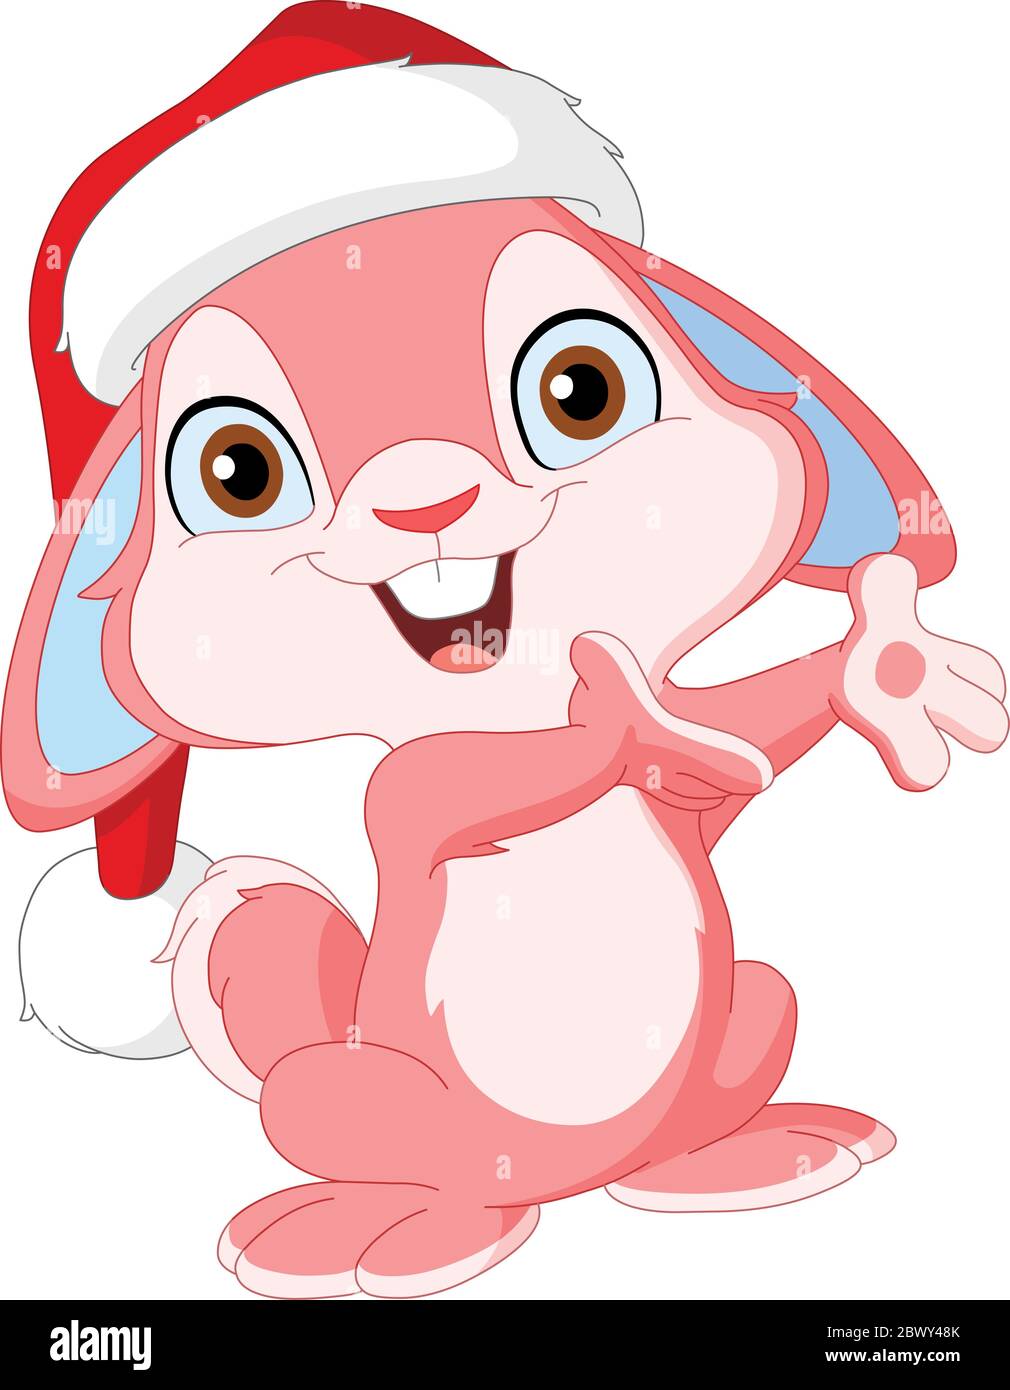 Christmas cute bunny with Santa’s hat Stock Vector